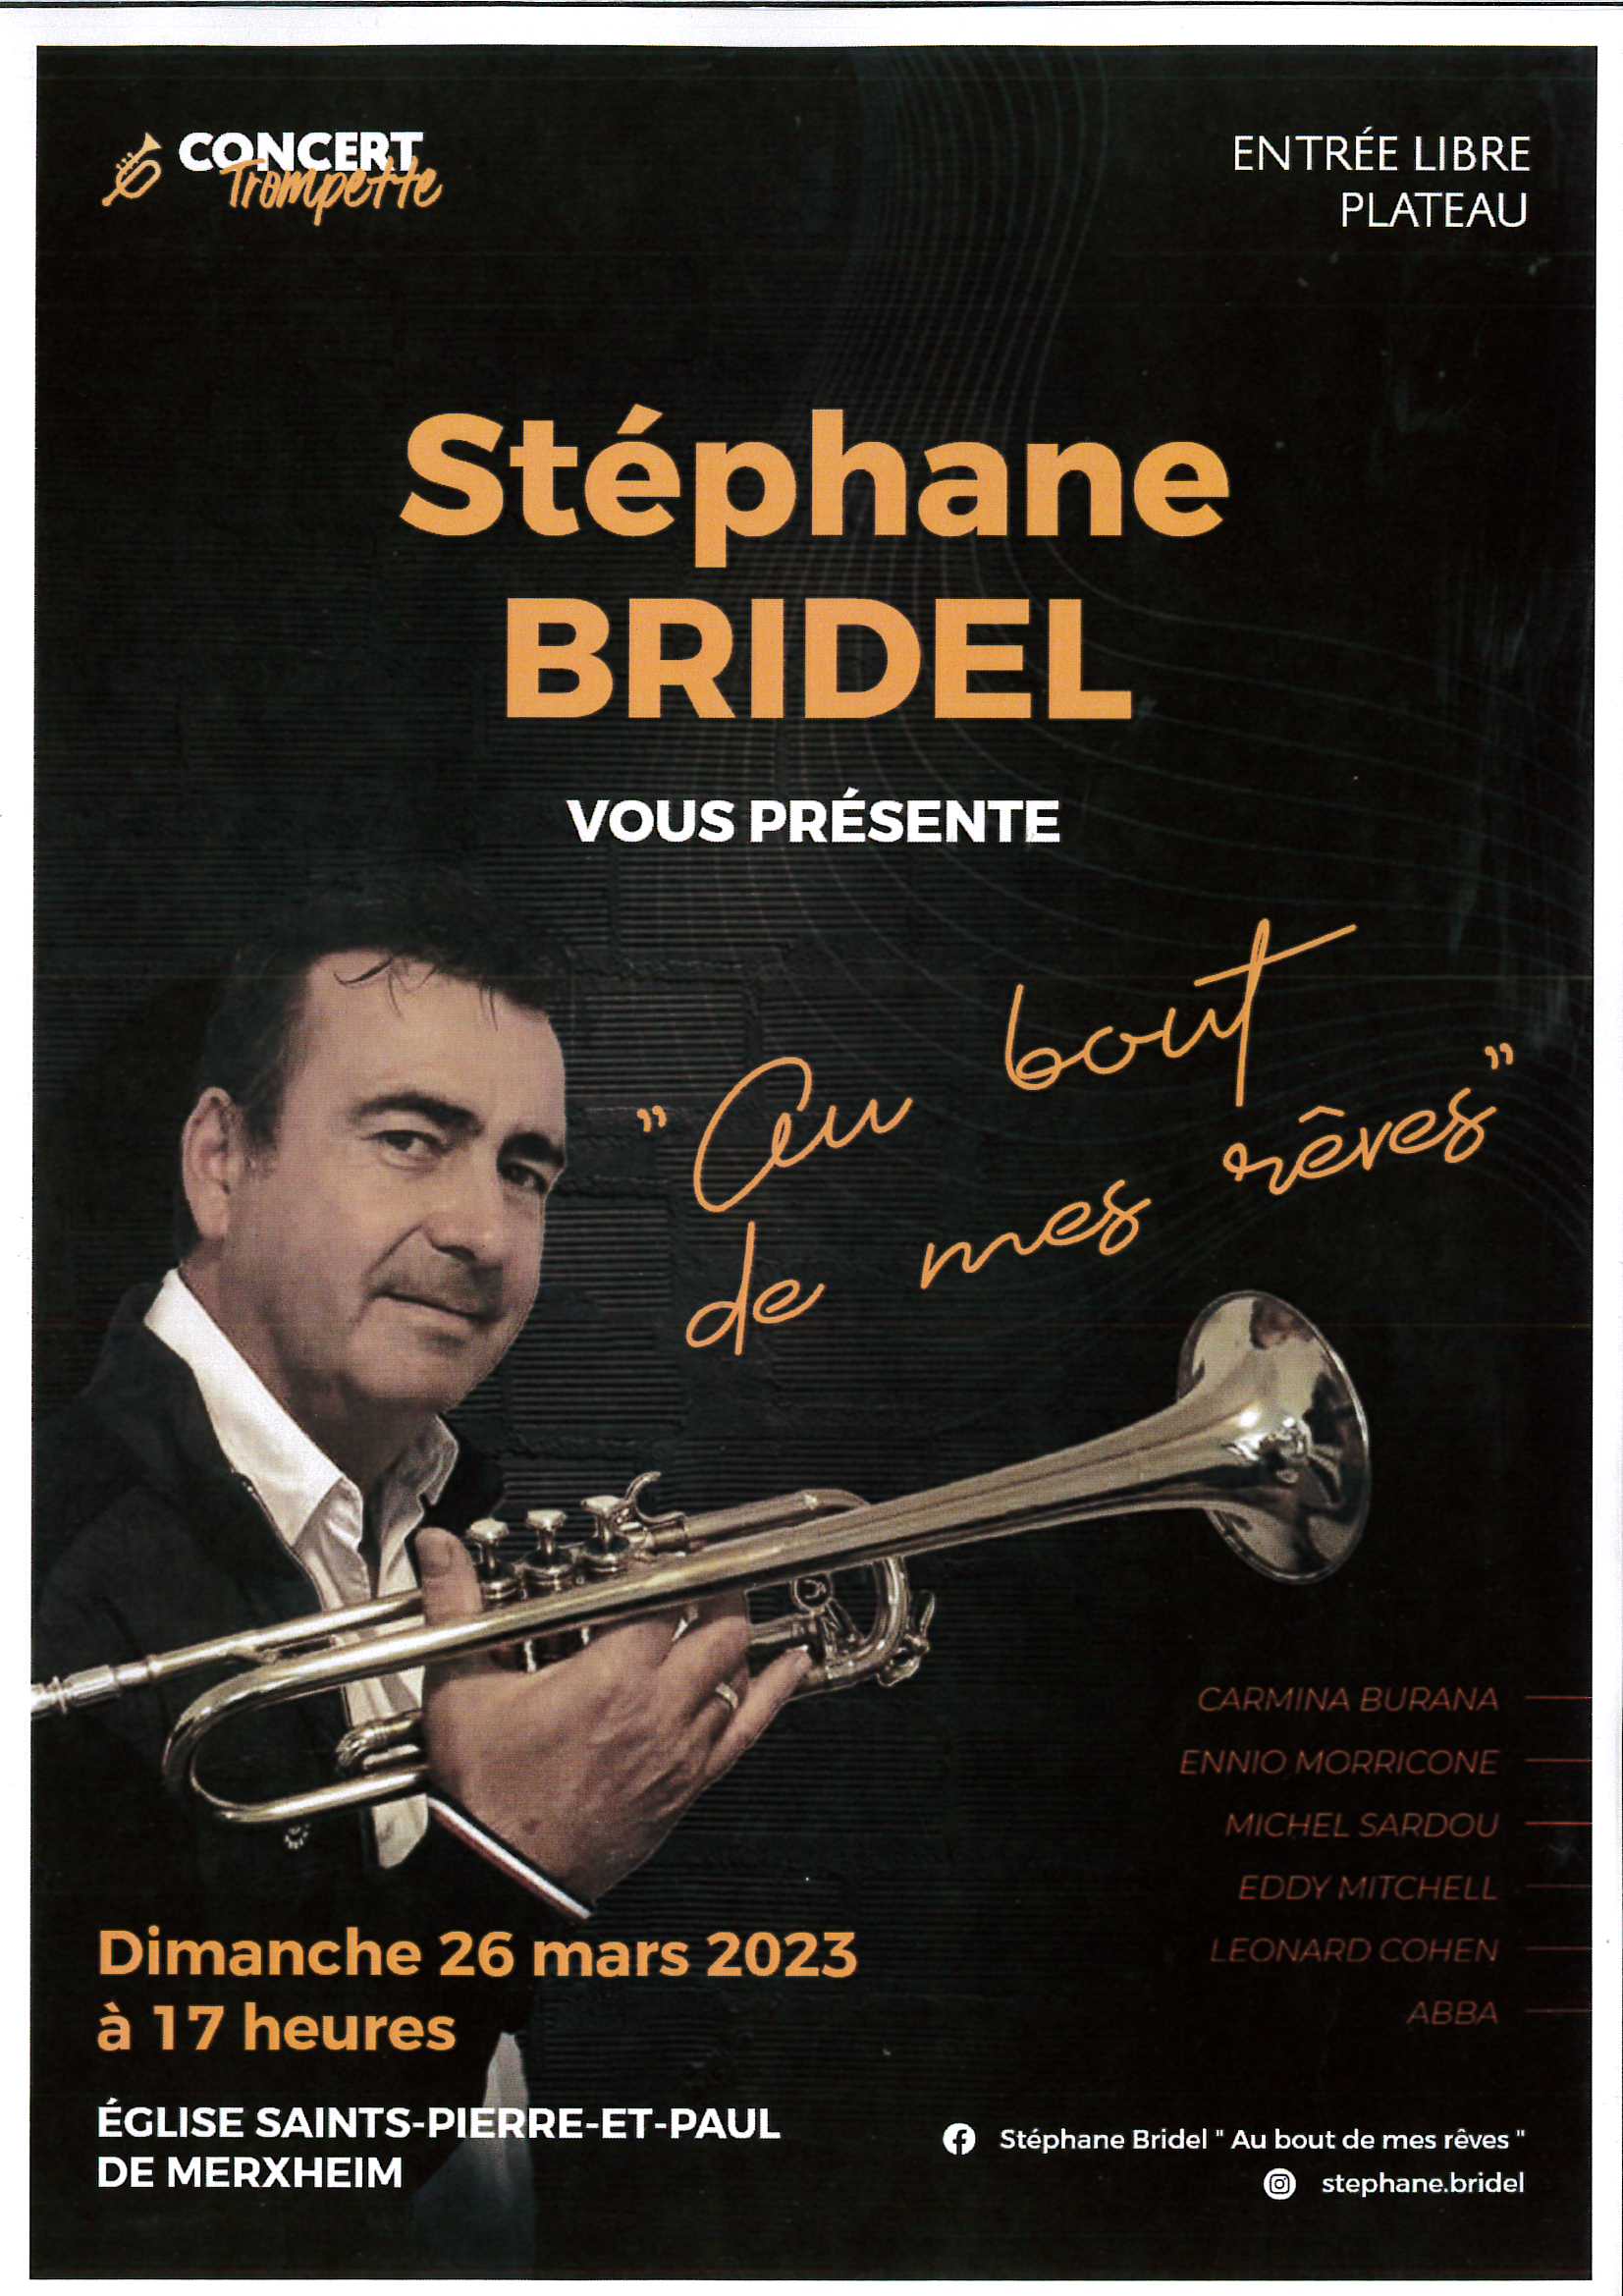 Concert trompette - Stéphane Bridel